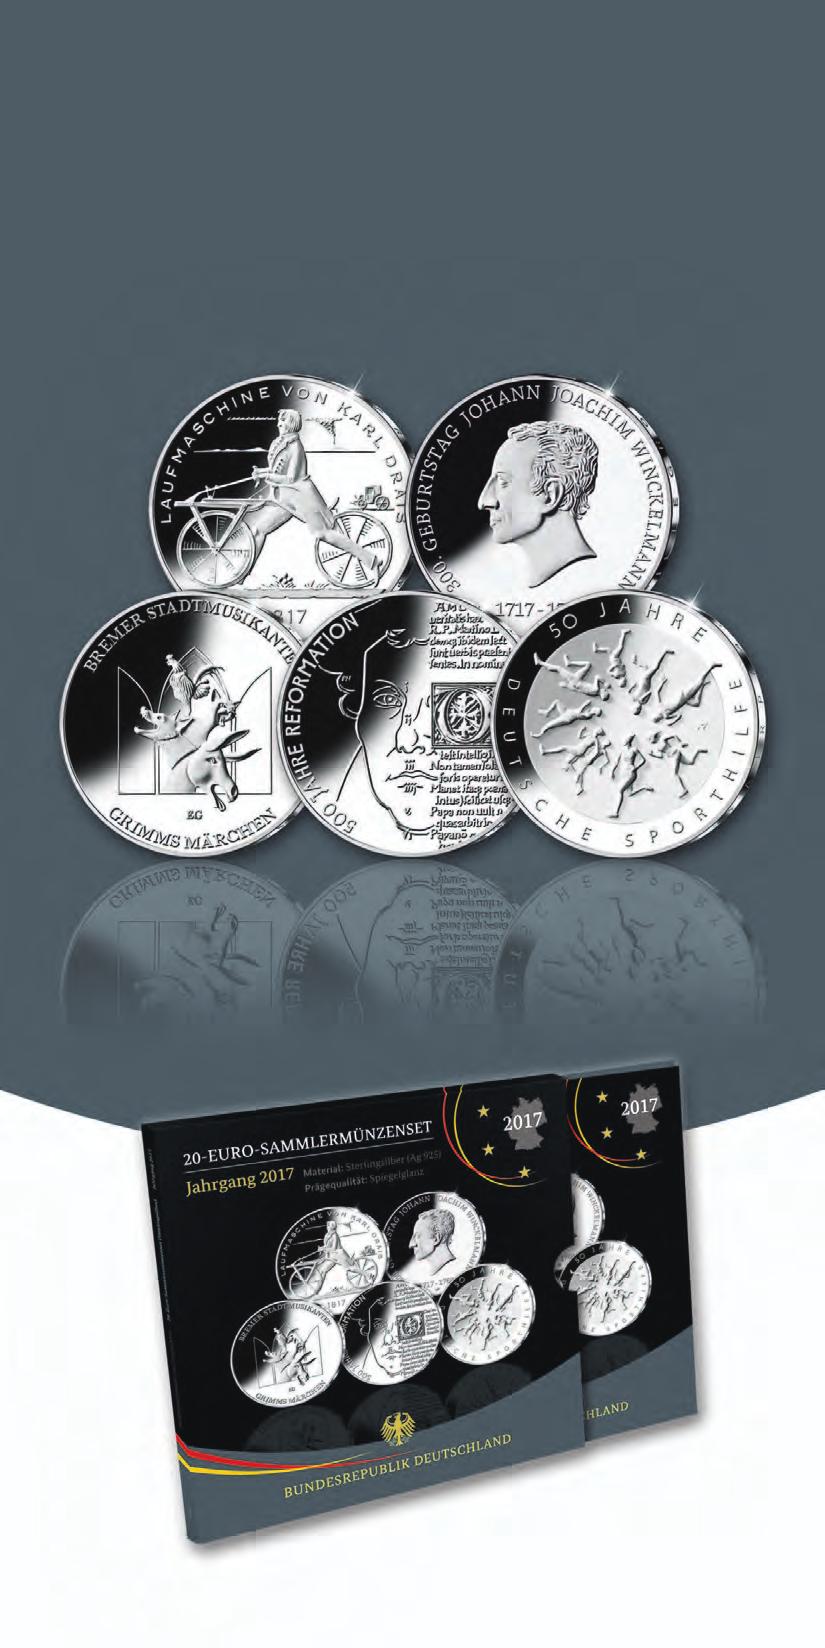 20-Euro-Sammlermünzenset Jahrgang 2017 12. Oktober 2017 20-Euro-Sammlermünzen (Sterlingsilber) limitiert auf max. 55.